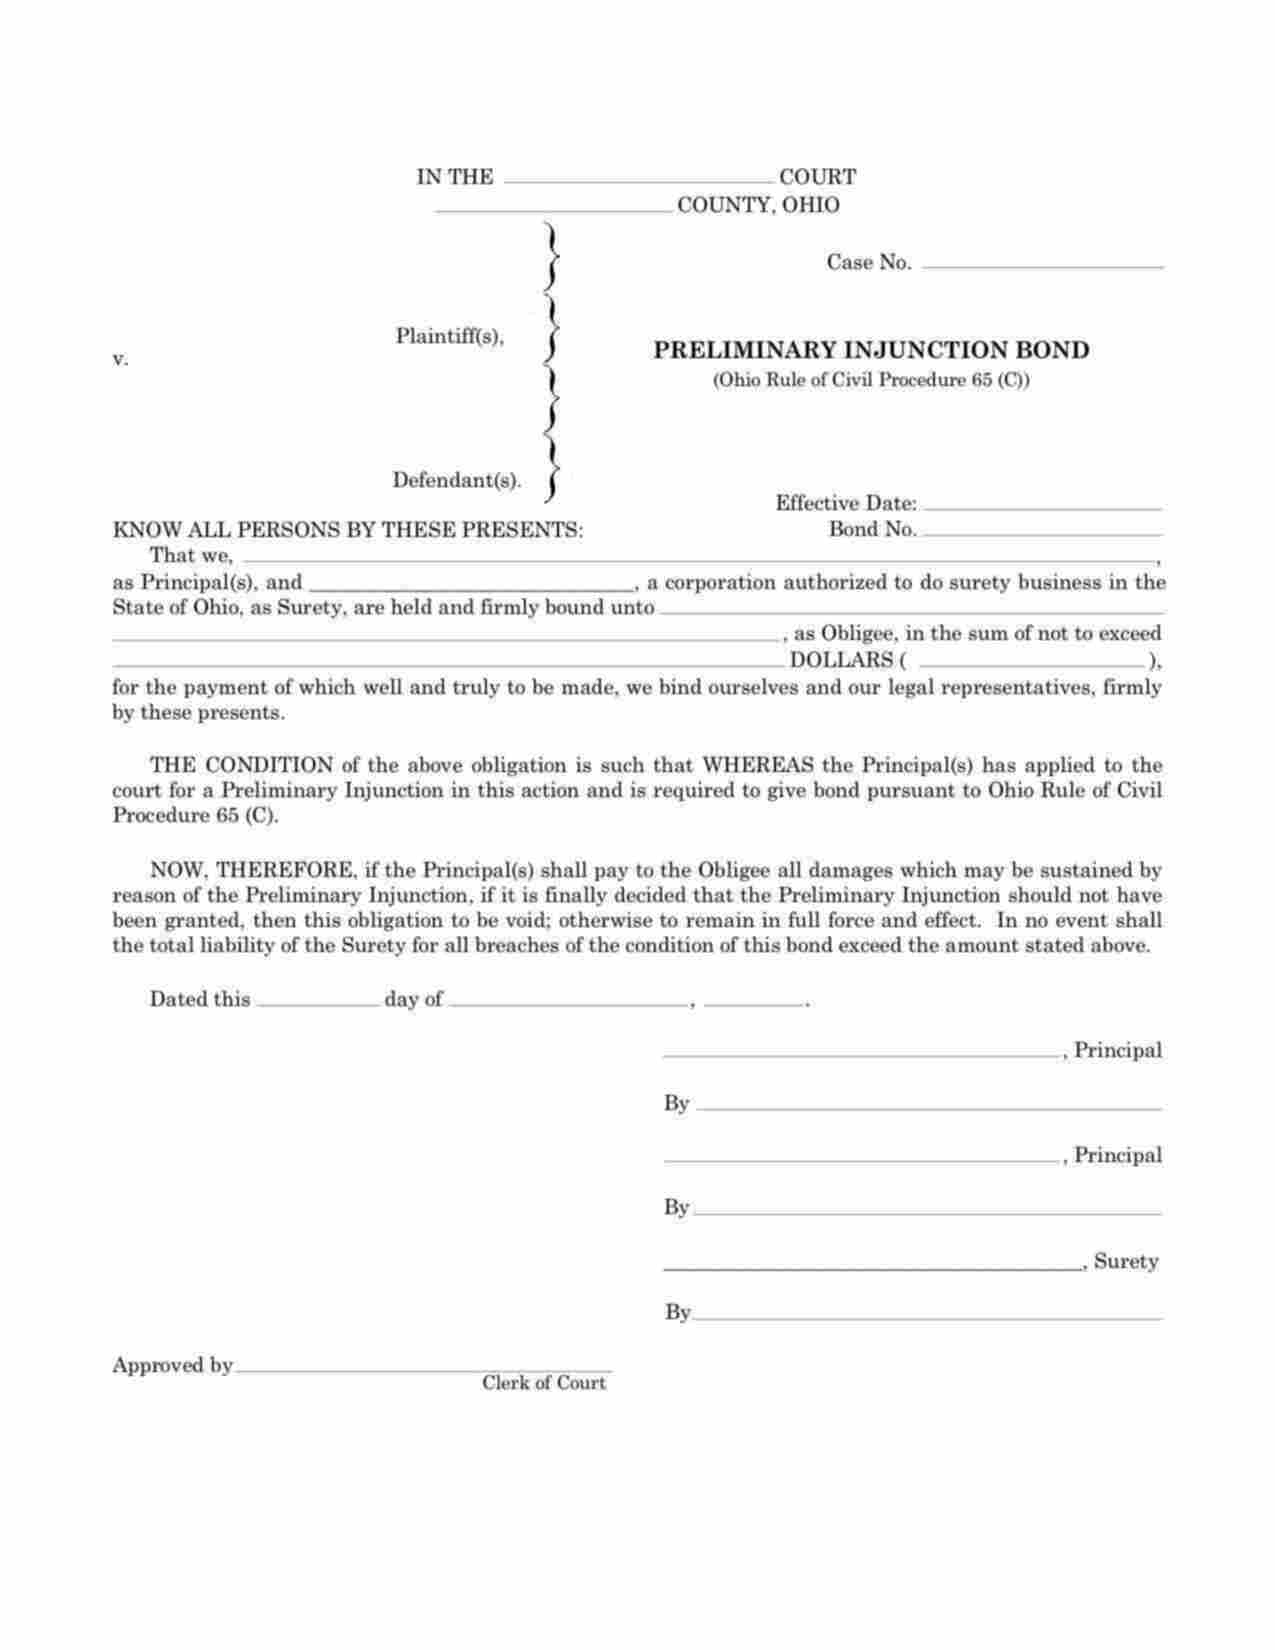 Ohio Preliminary Injunction Bond Form